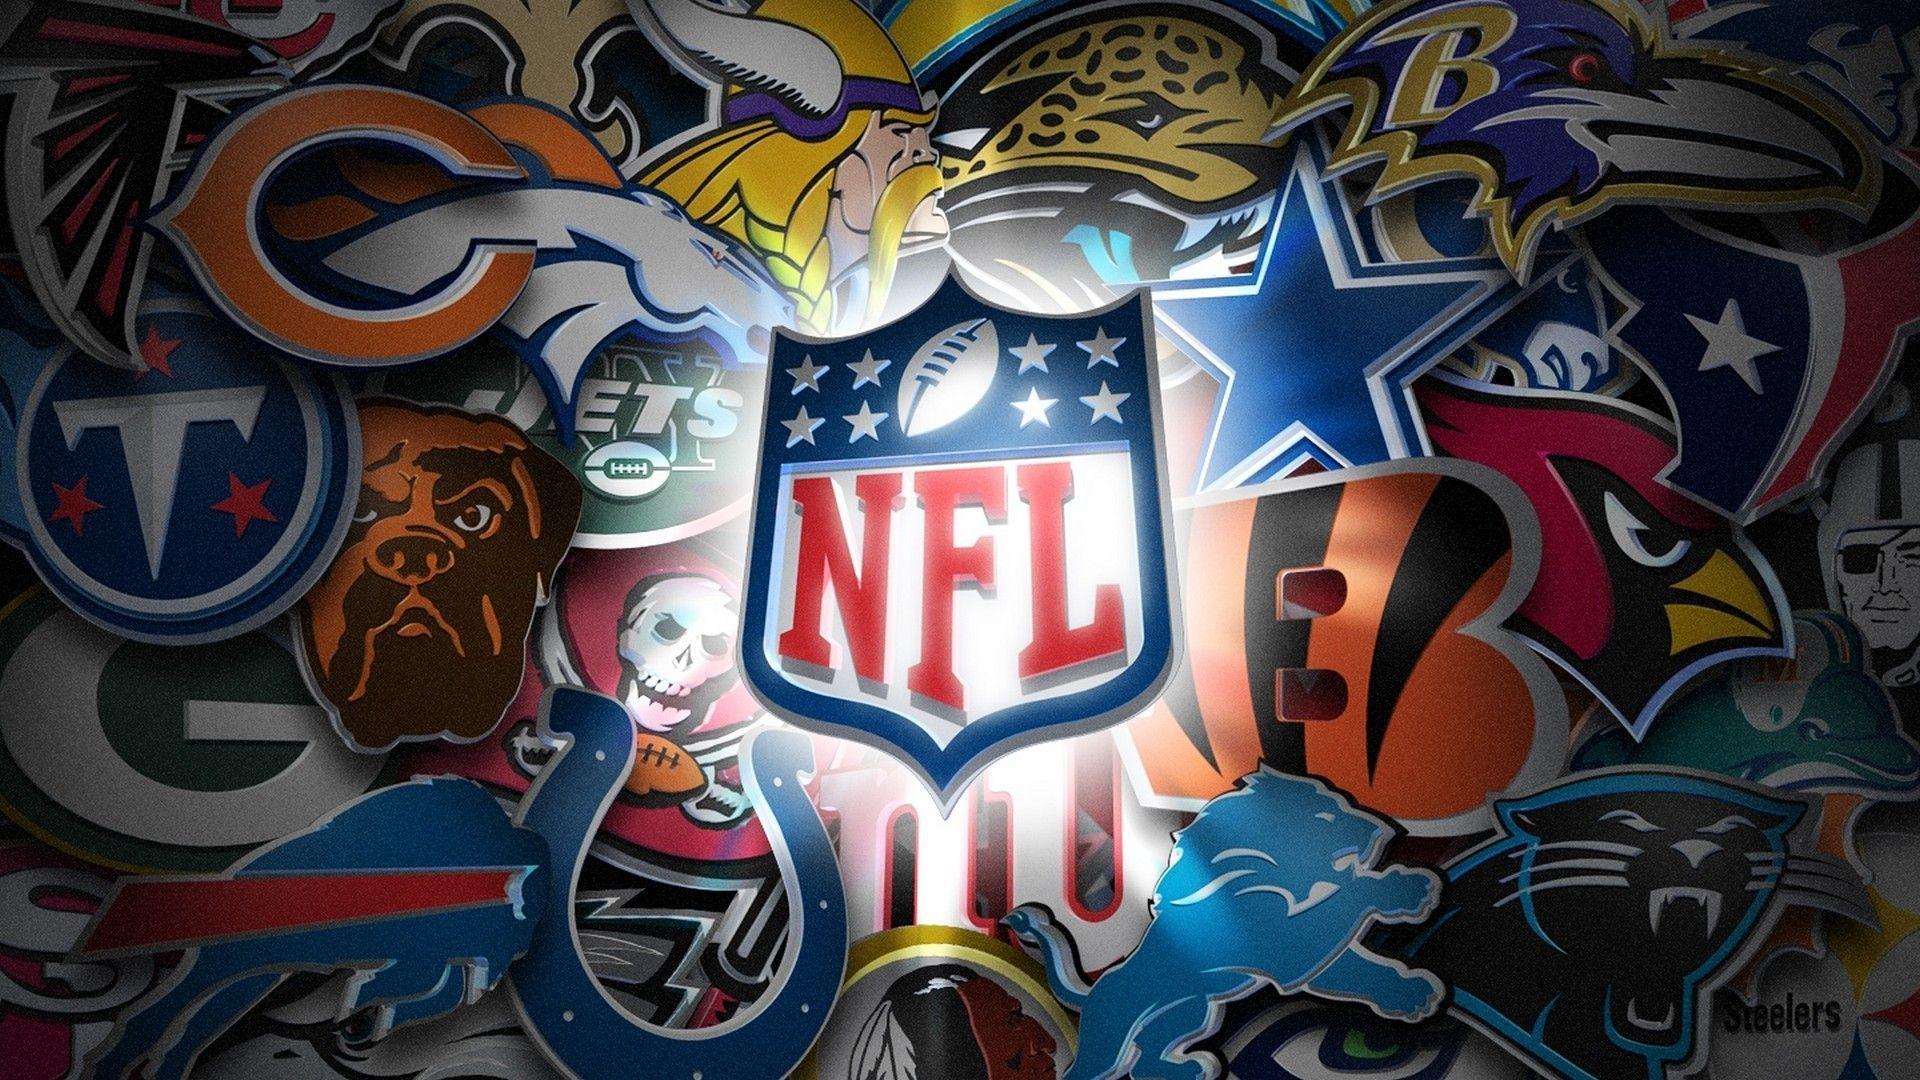 Cool NFL Logo - Cool NFL Mac Backgrounds | Wallpapers | NFL, Football, Fantasy football